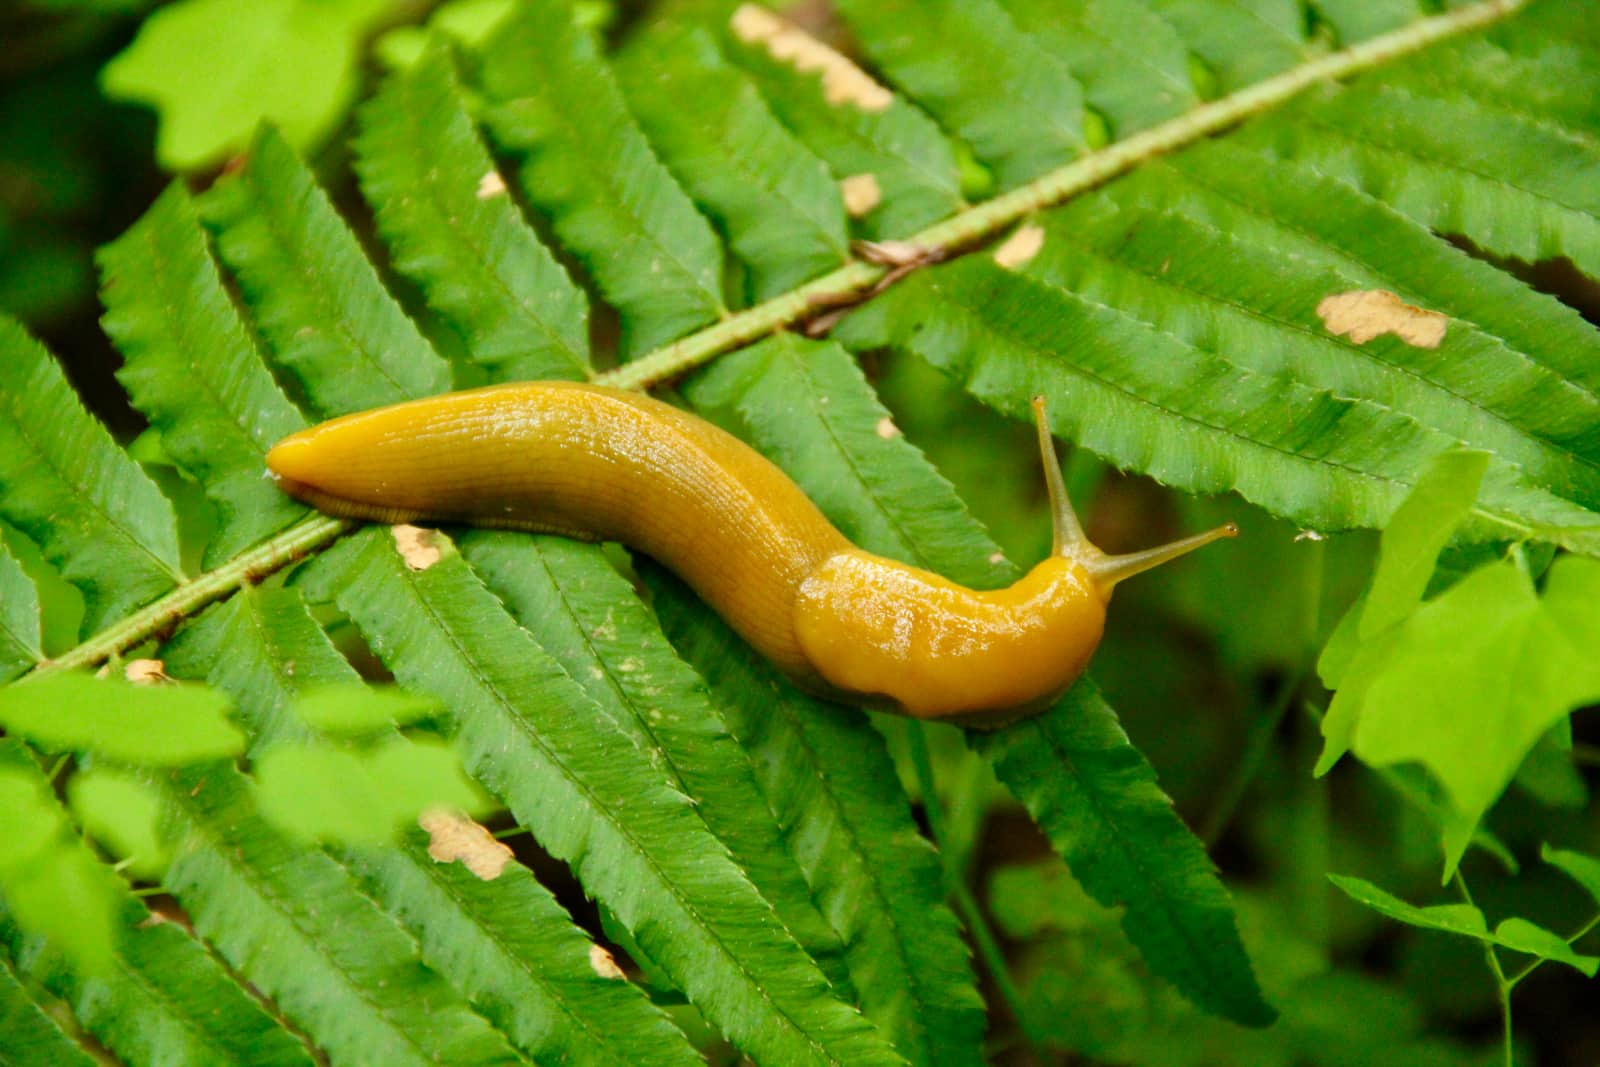 Yellow slug on green leaves